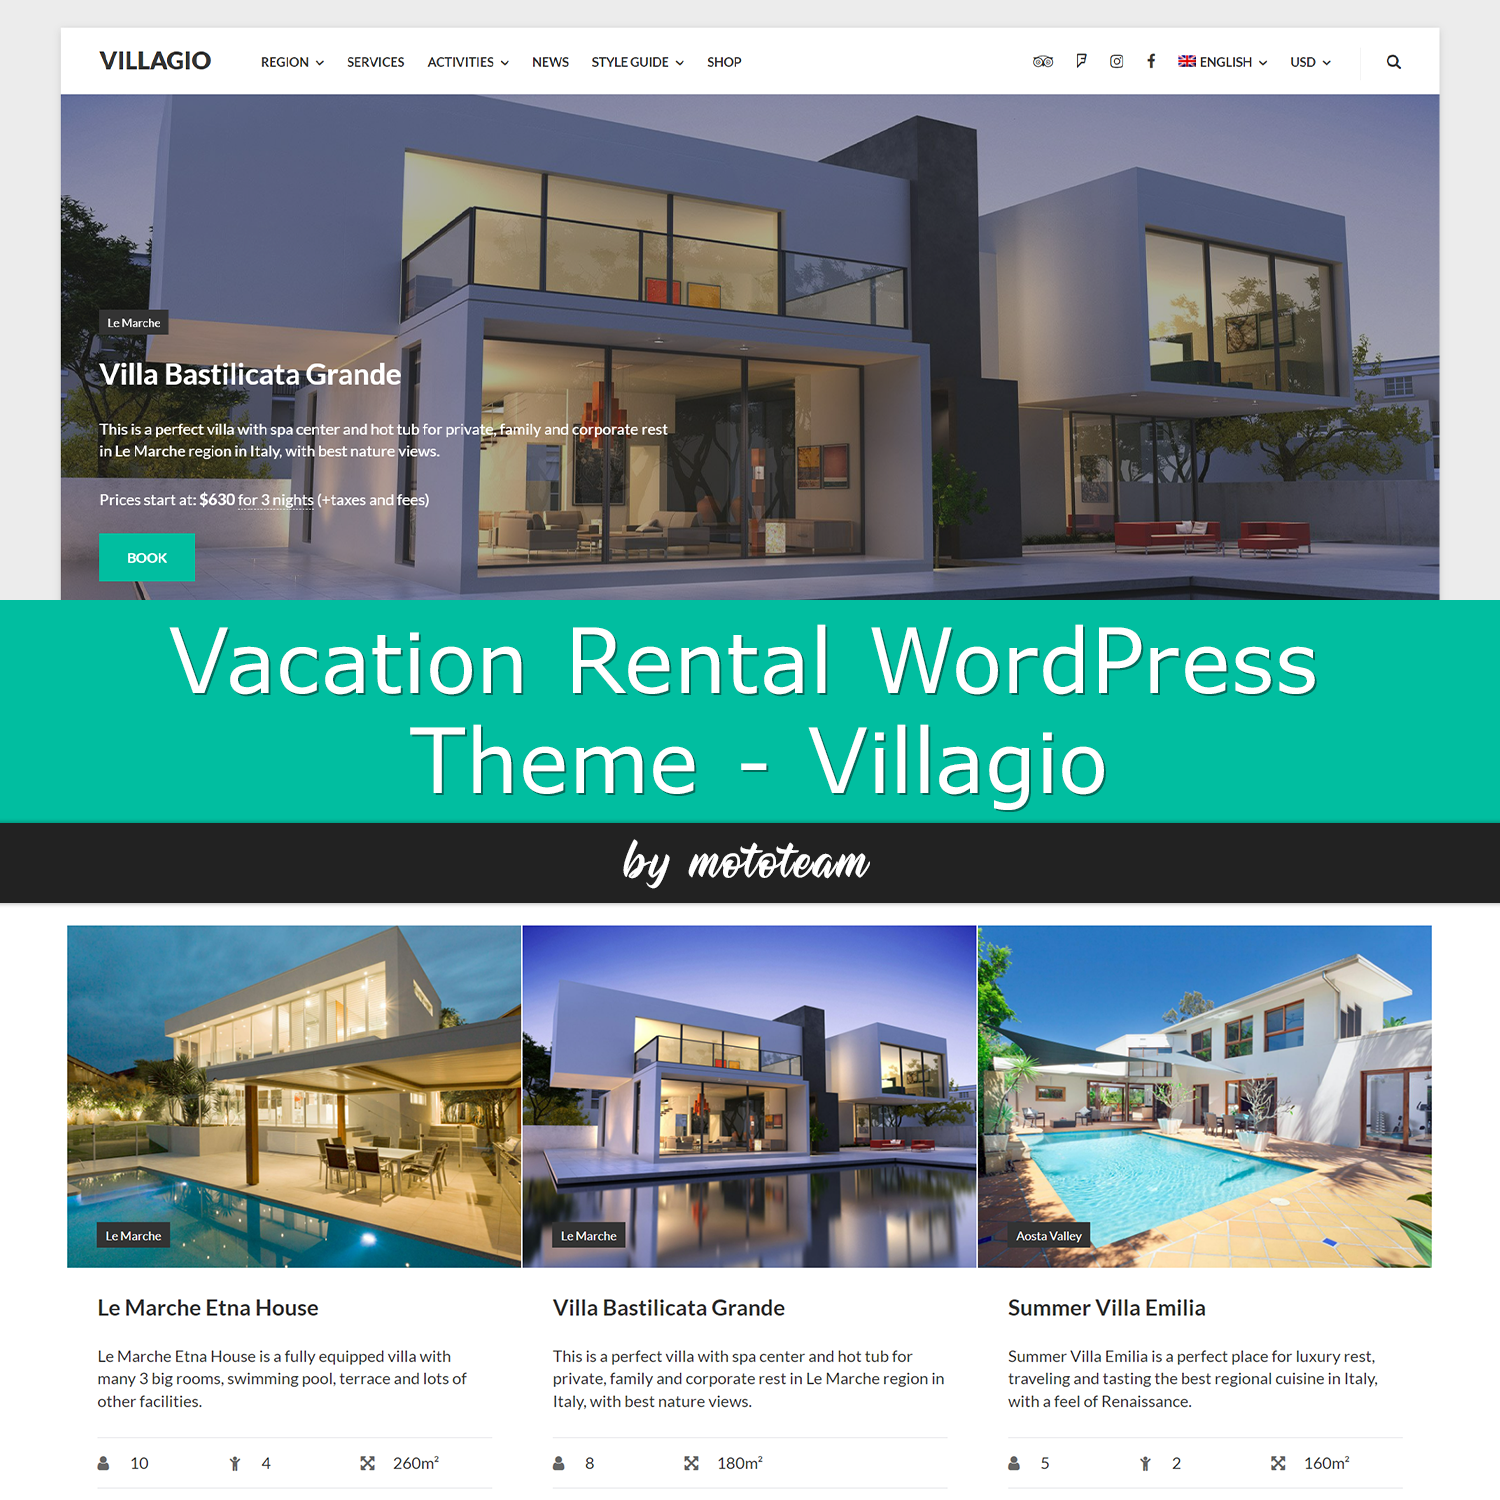 Images with vacation rental wordpress theme villagio.